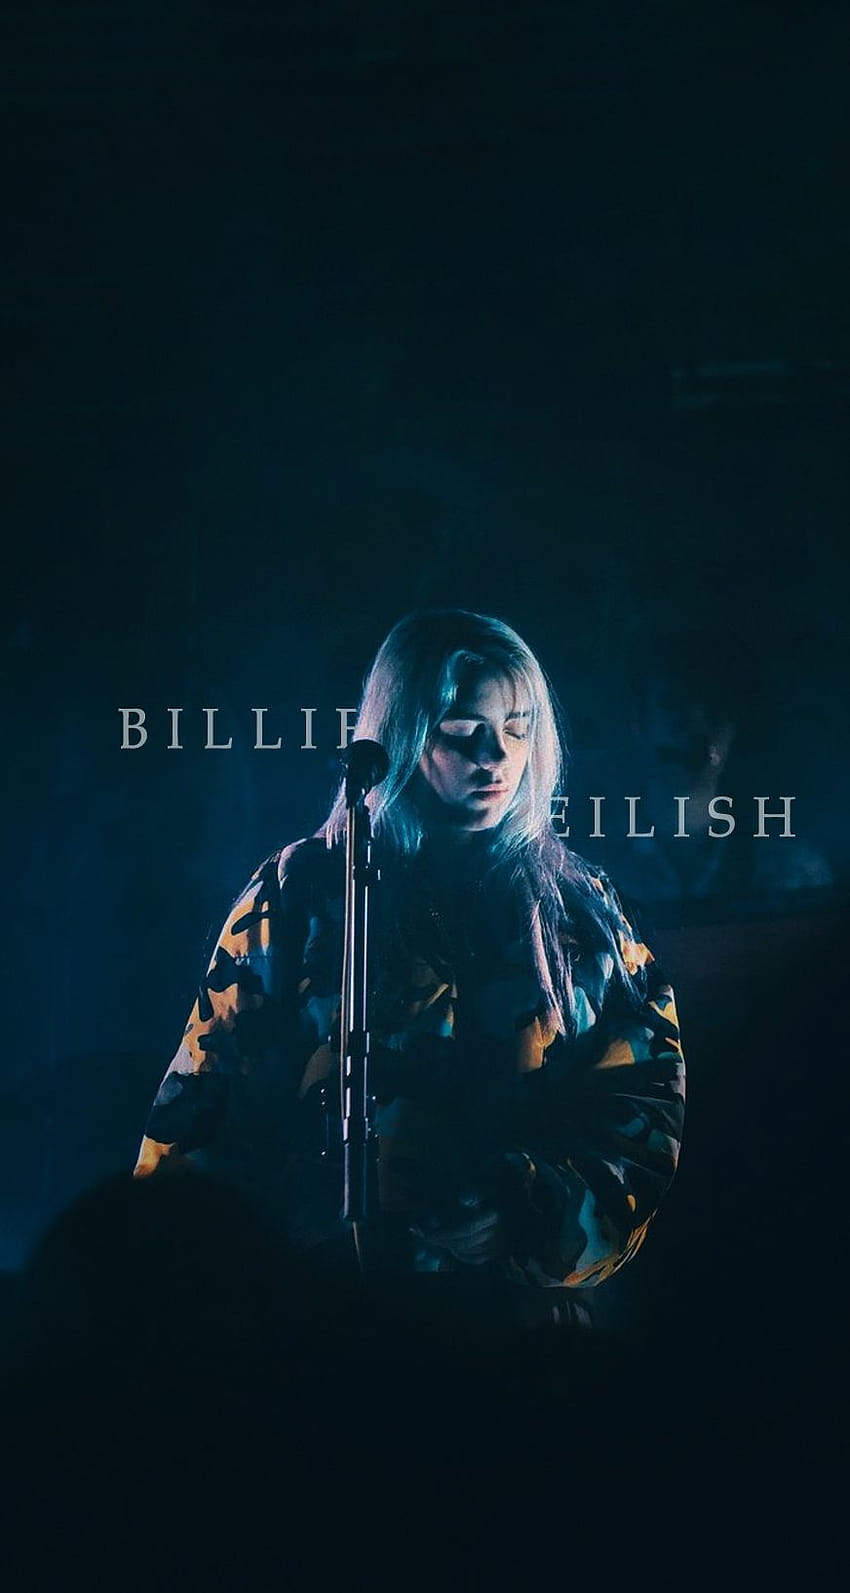 200+] Billie Eilish Wallpapers | Wallpapers.com